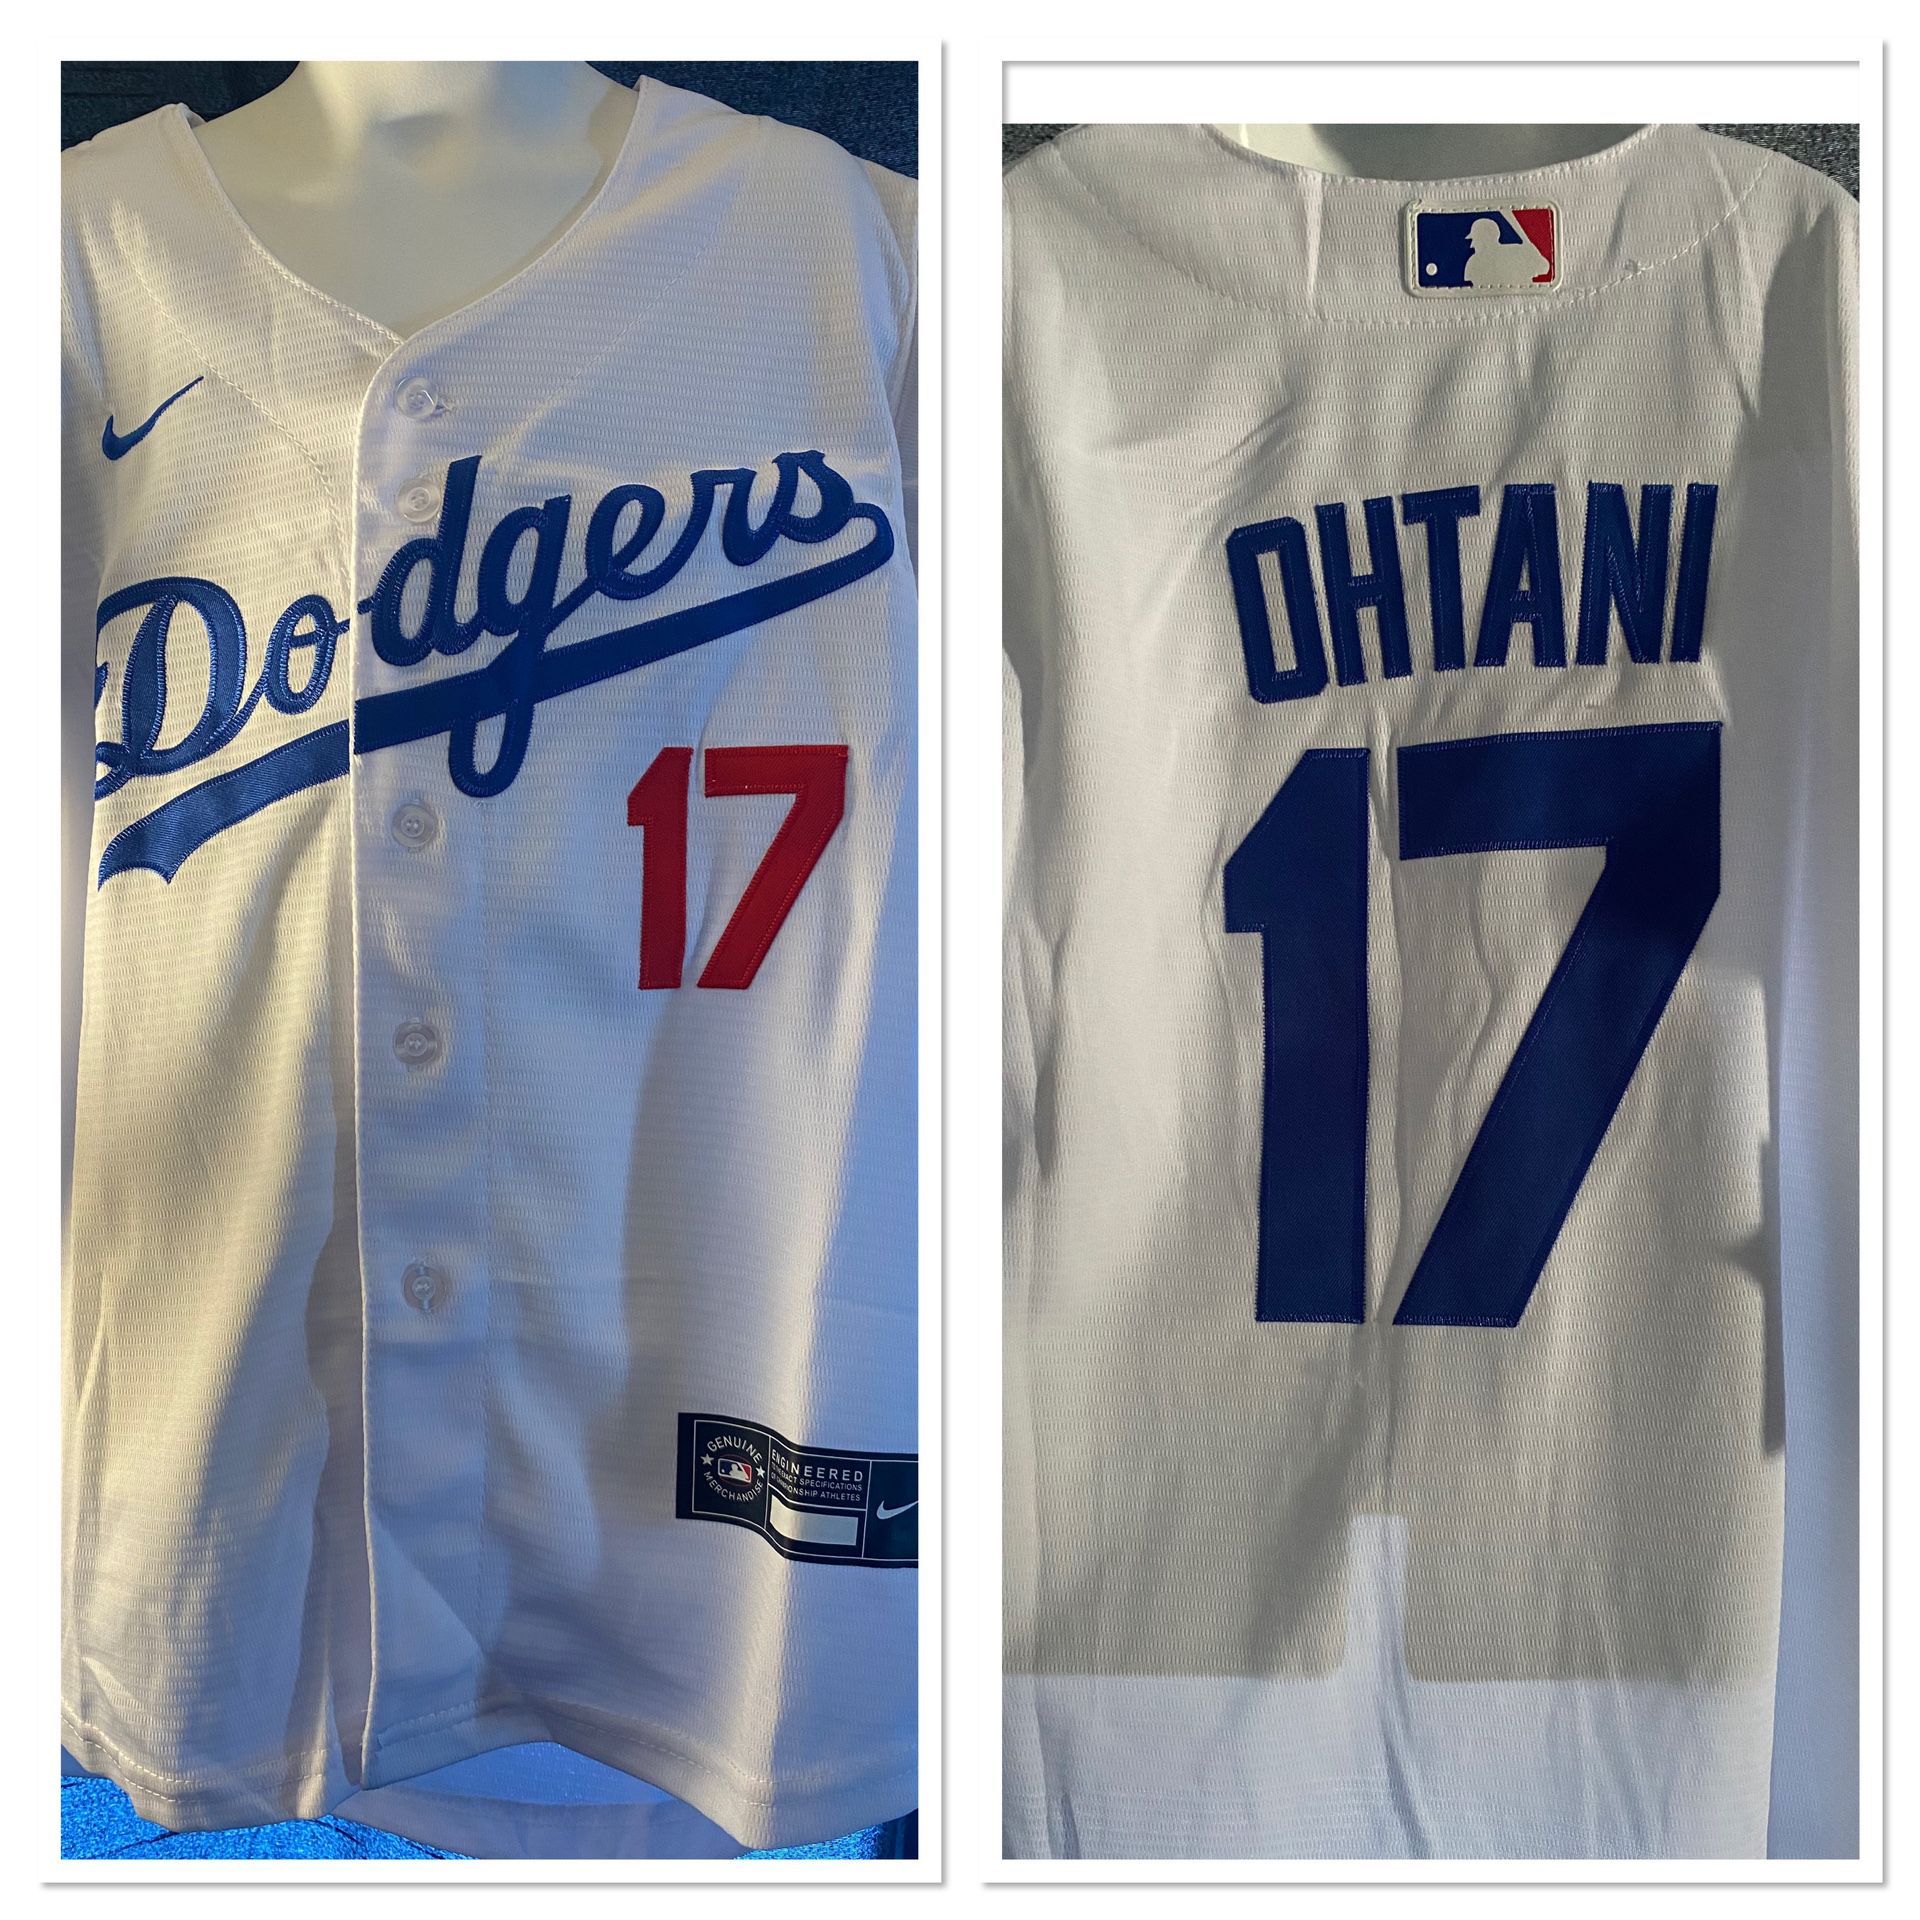 Shohei Ohtani #17 Men's Los Angeles Dodgers Nike White Jersey Small Medium Large X-Large 2XL 3XL